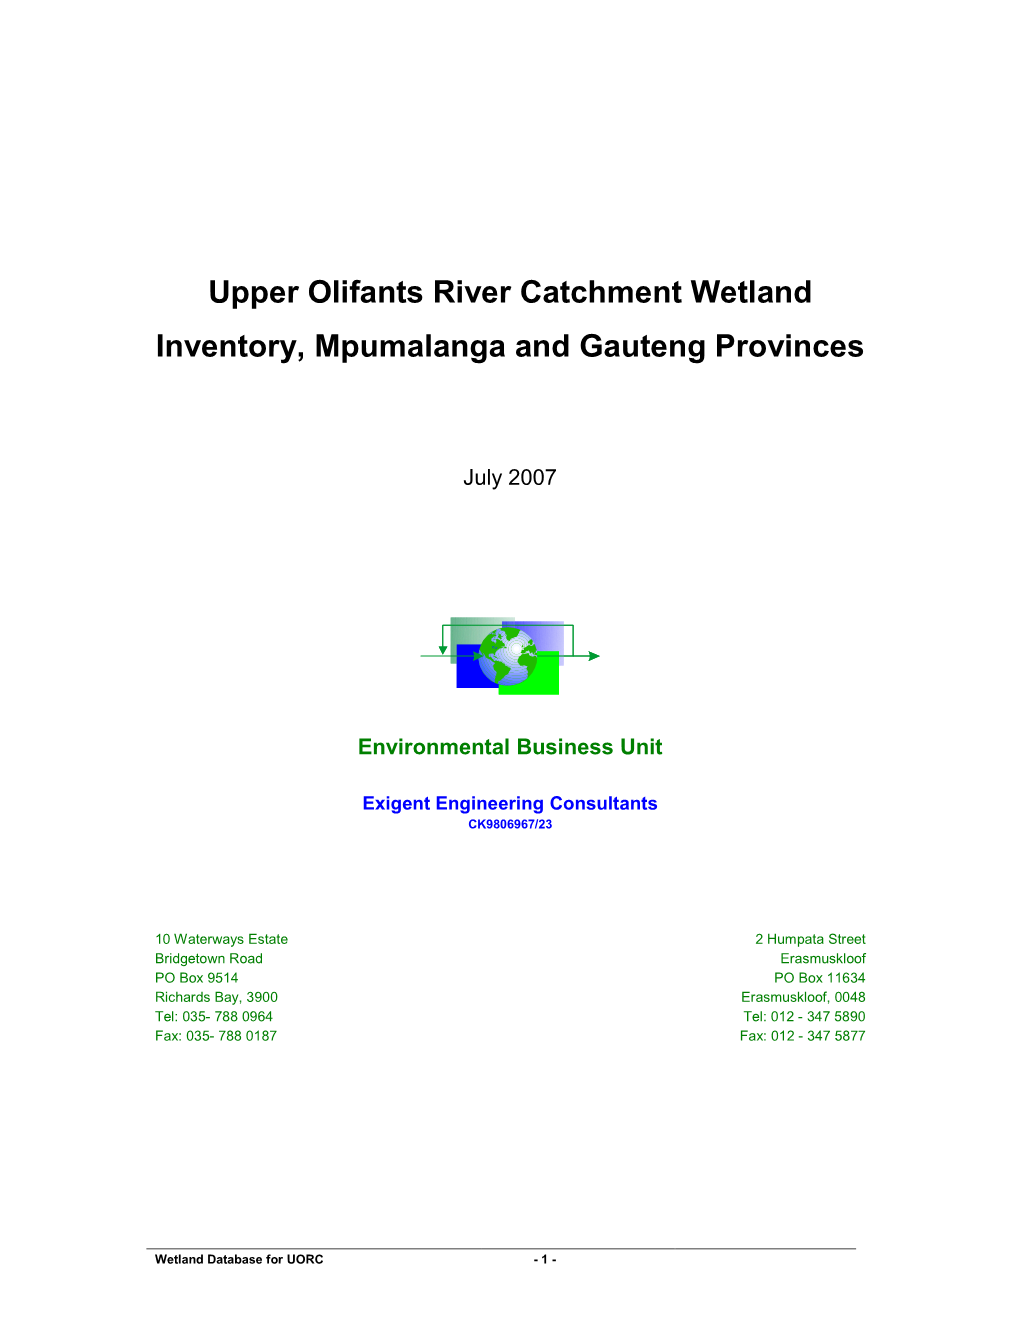 Upper Olifants River Catchment Wetland Inventory, Mpumalanga and Gauteng Provinces